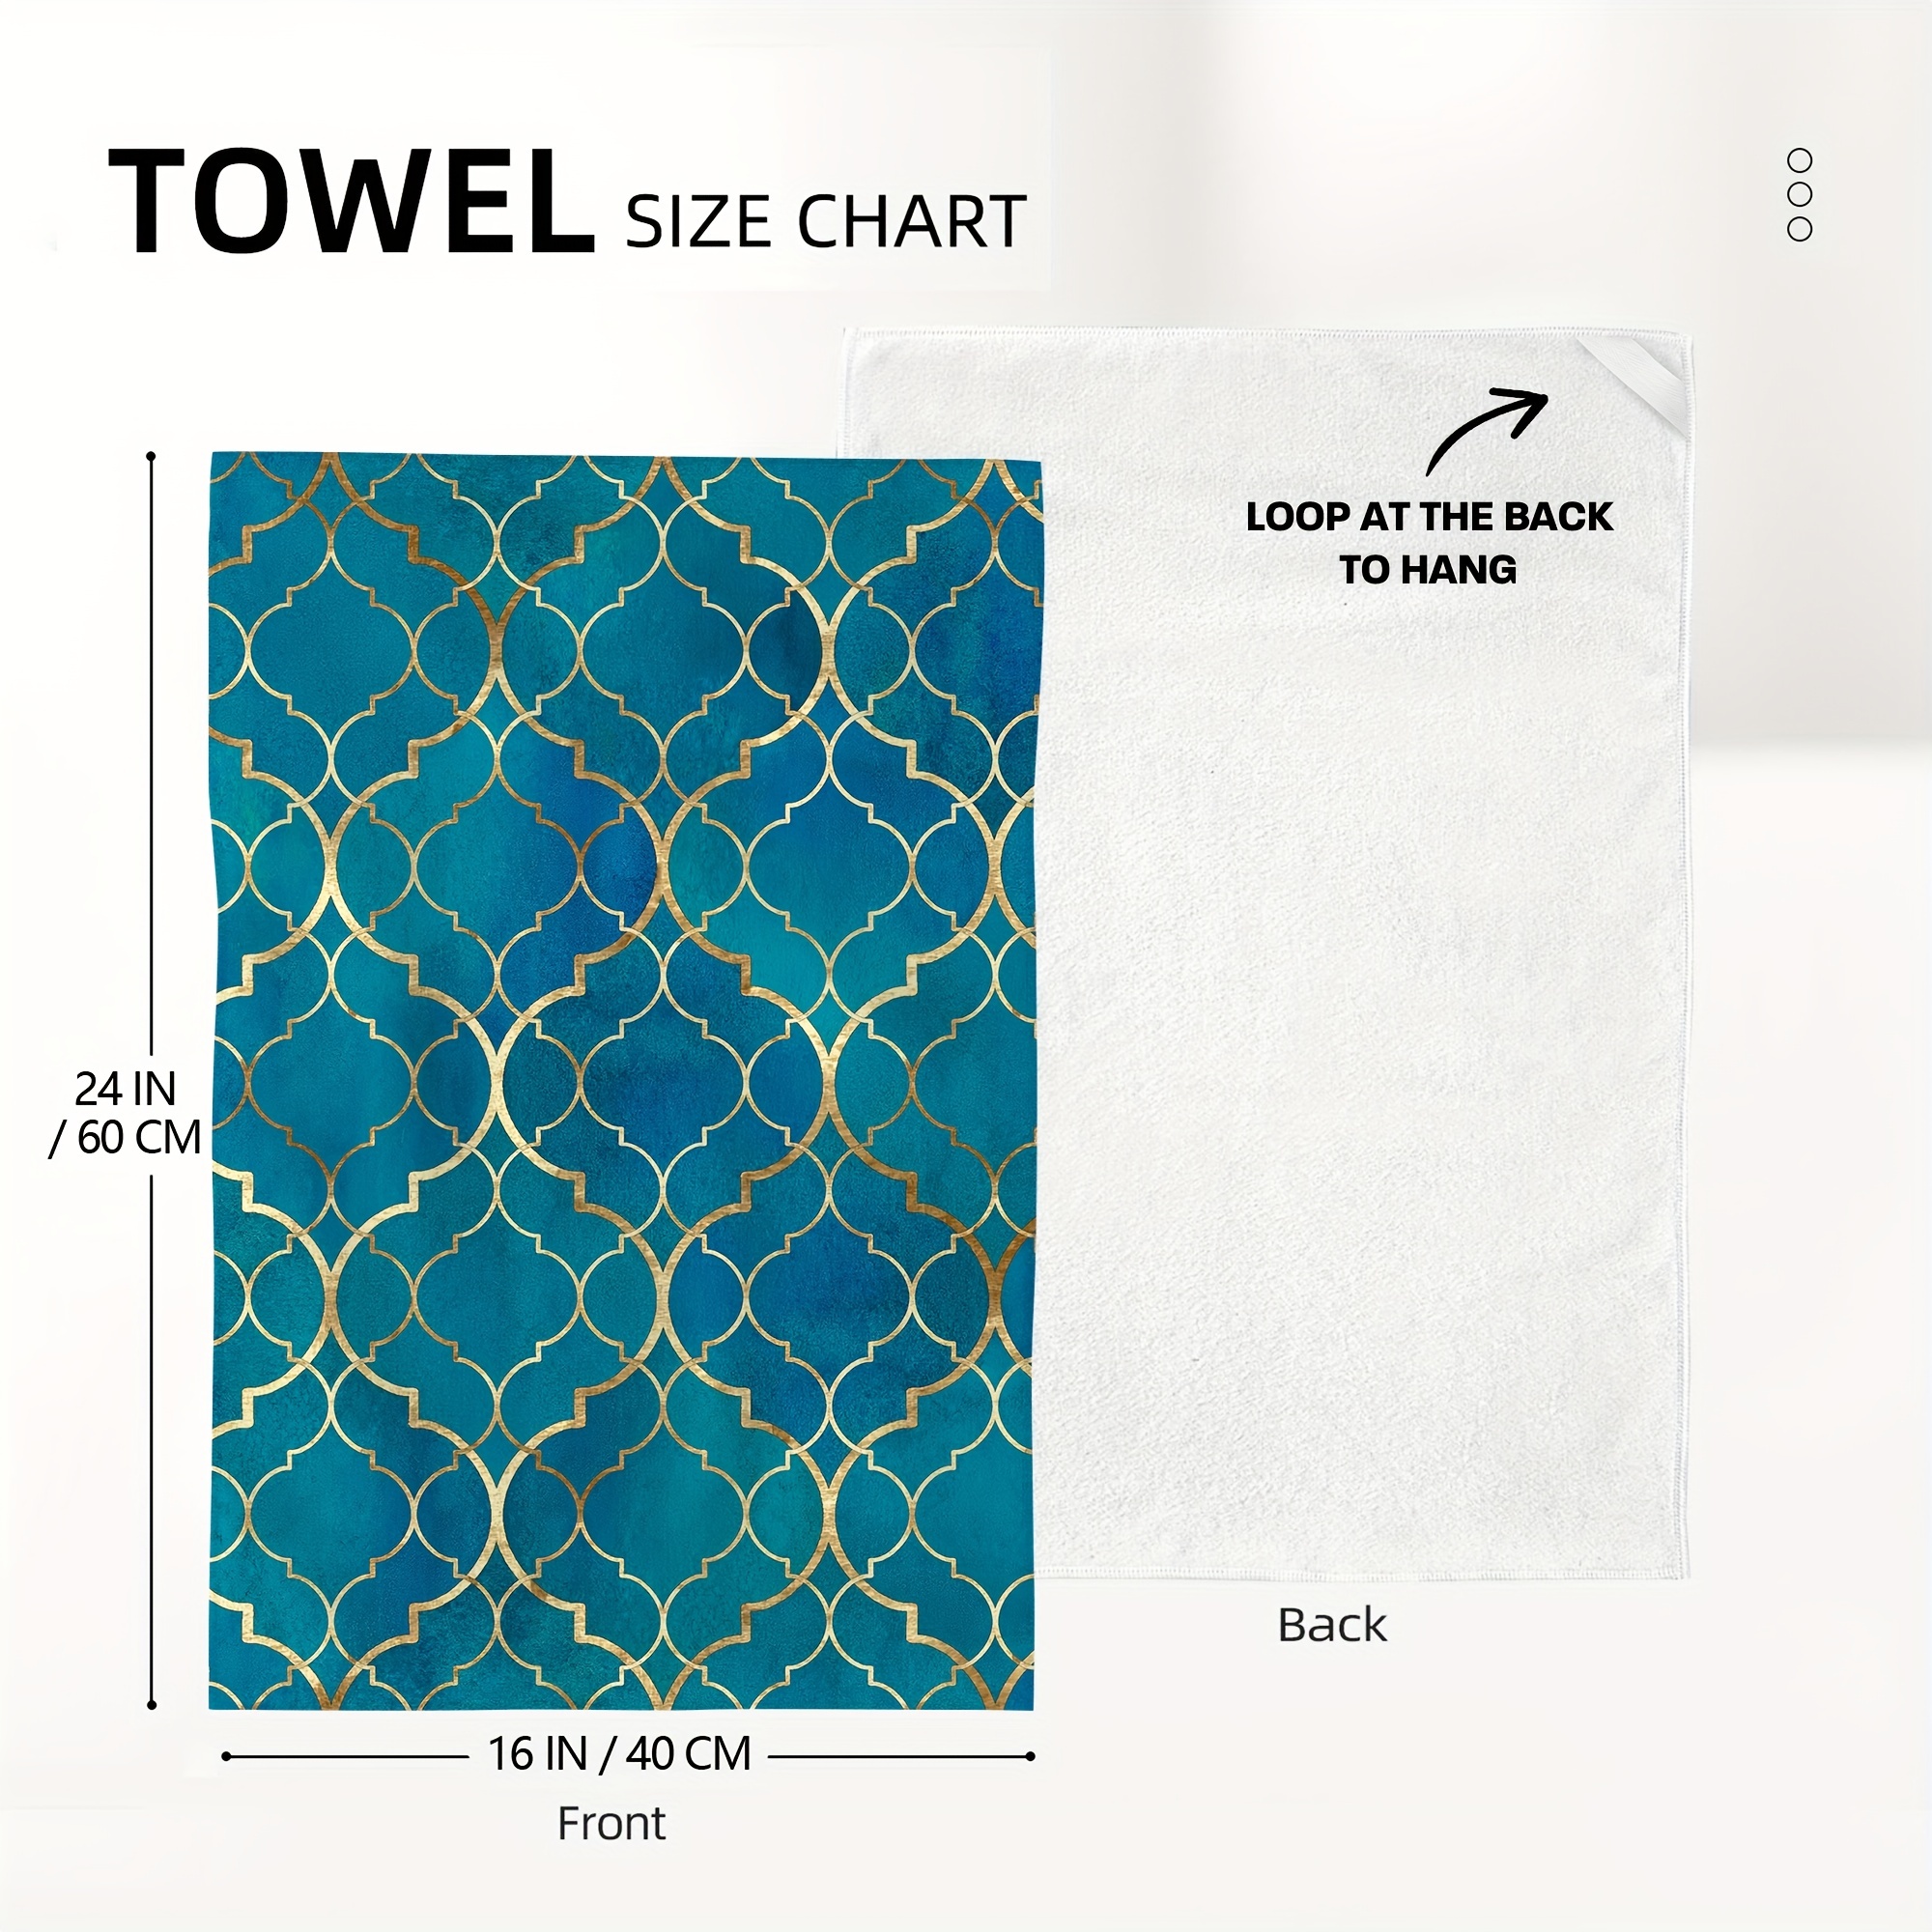 GEOMETRY Kitchen Tea Towel -Quick Dry Microfiber Dish Towels, My